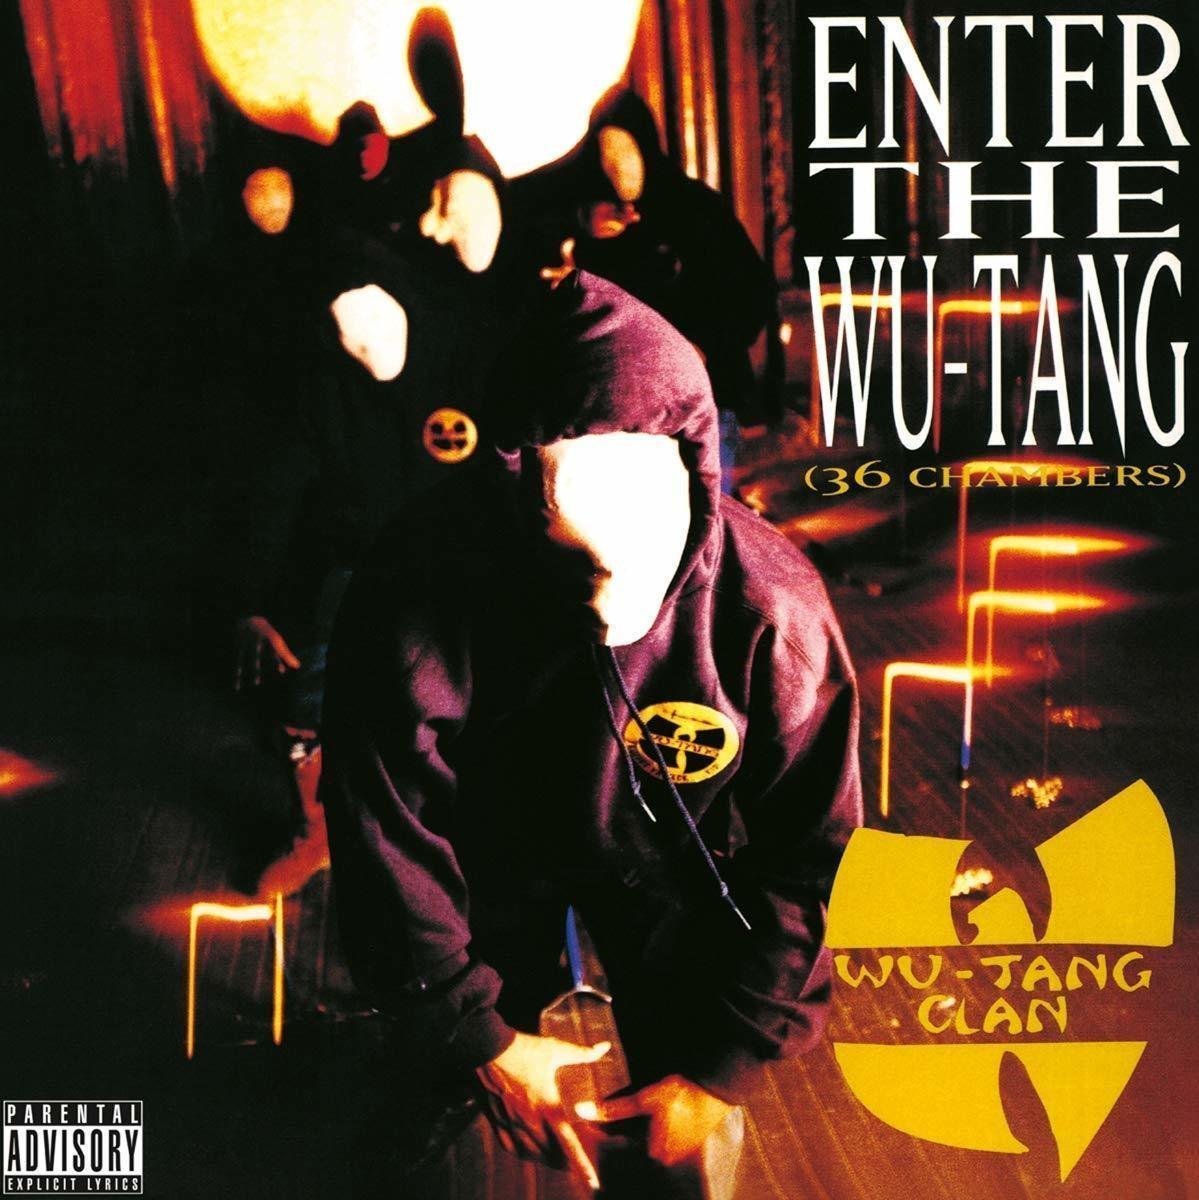 Vinyl Record Wu-Tang Clan - Enter the Wu-Tang Clan (36 Chambers) (Yellow Coloured) (LP)